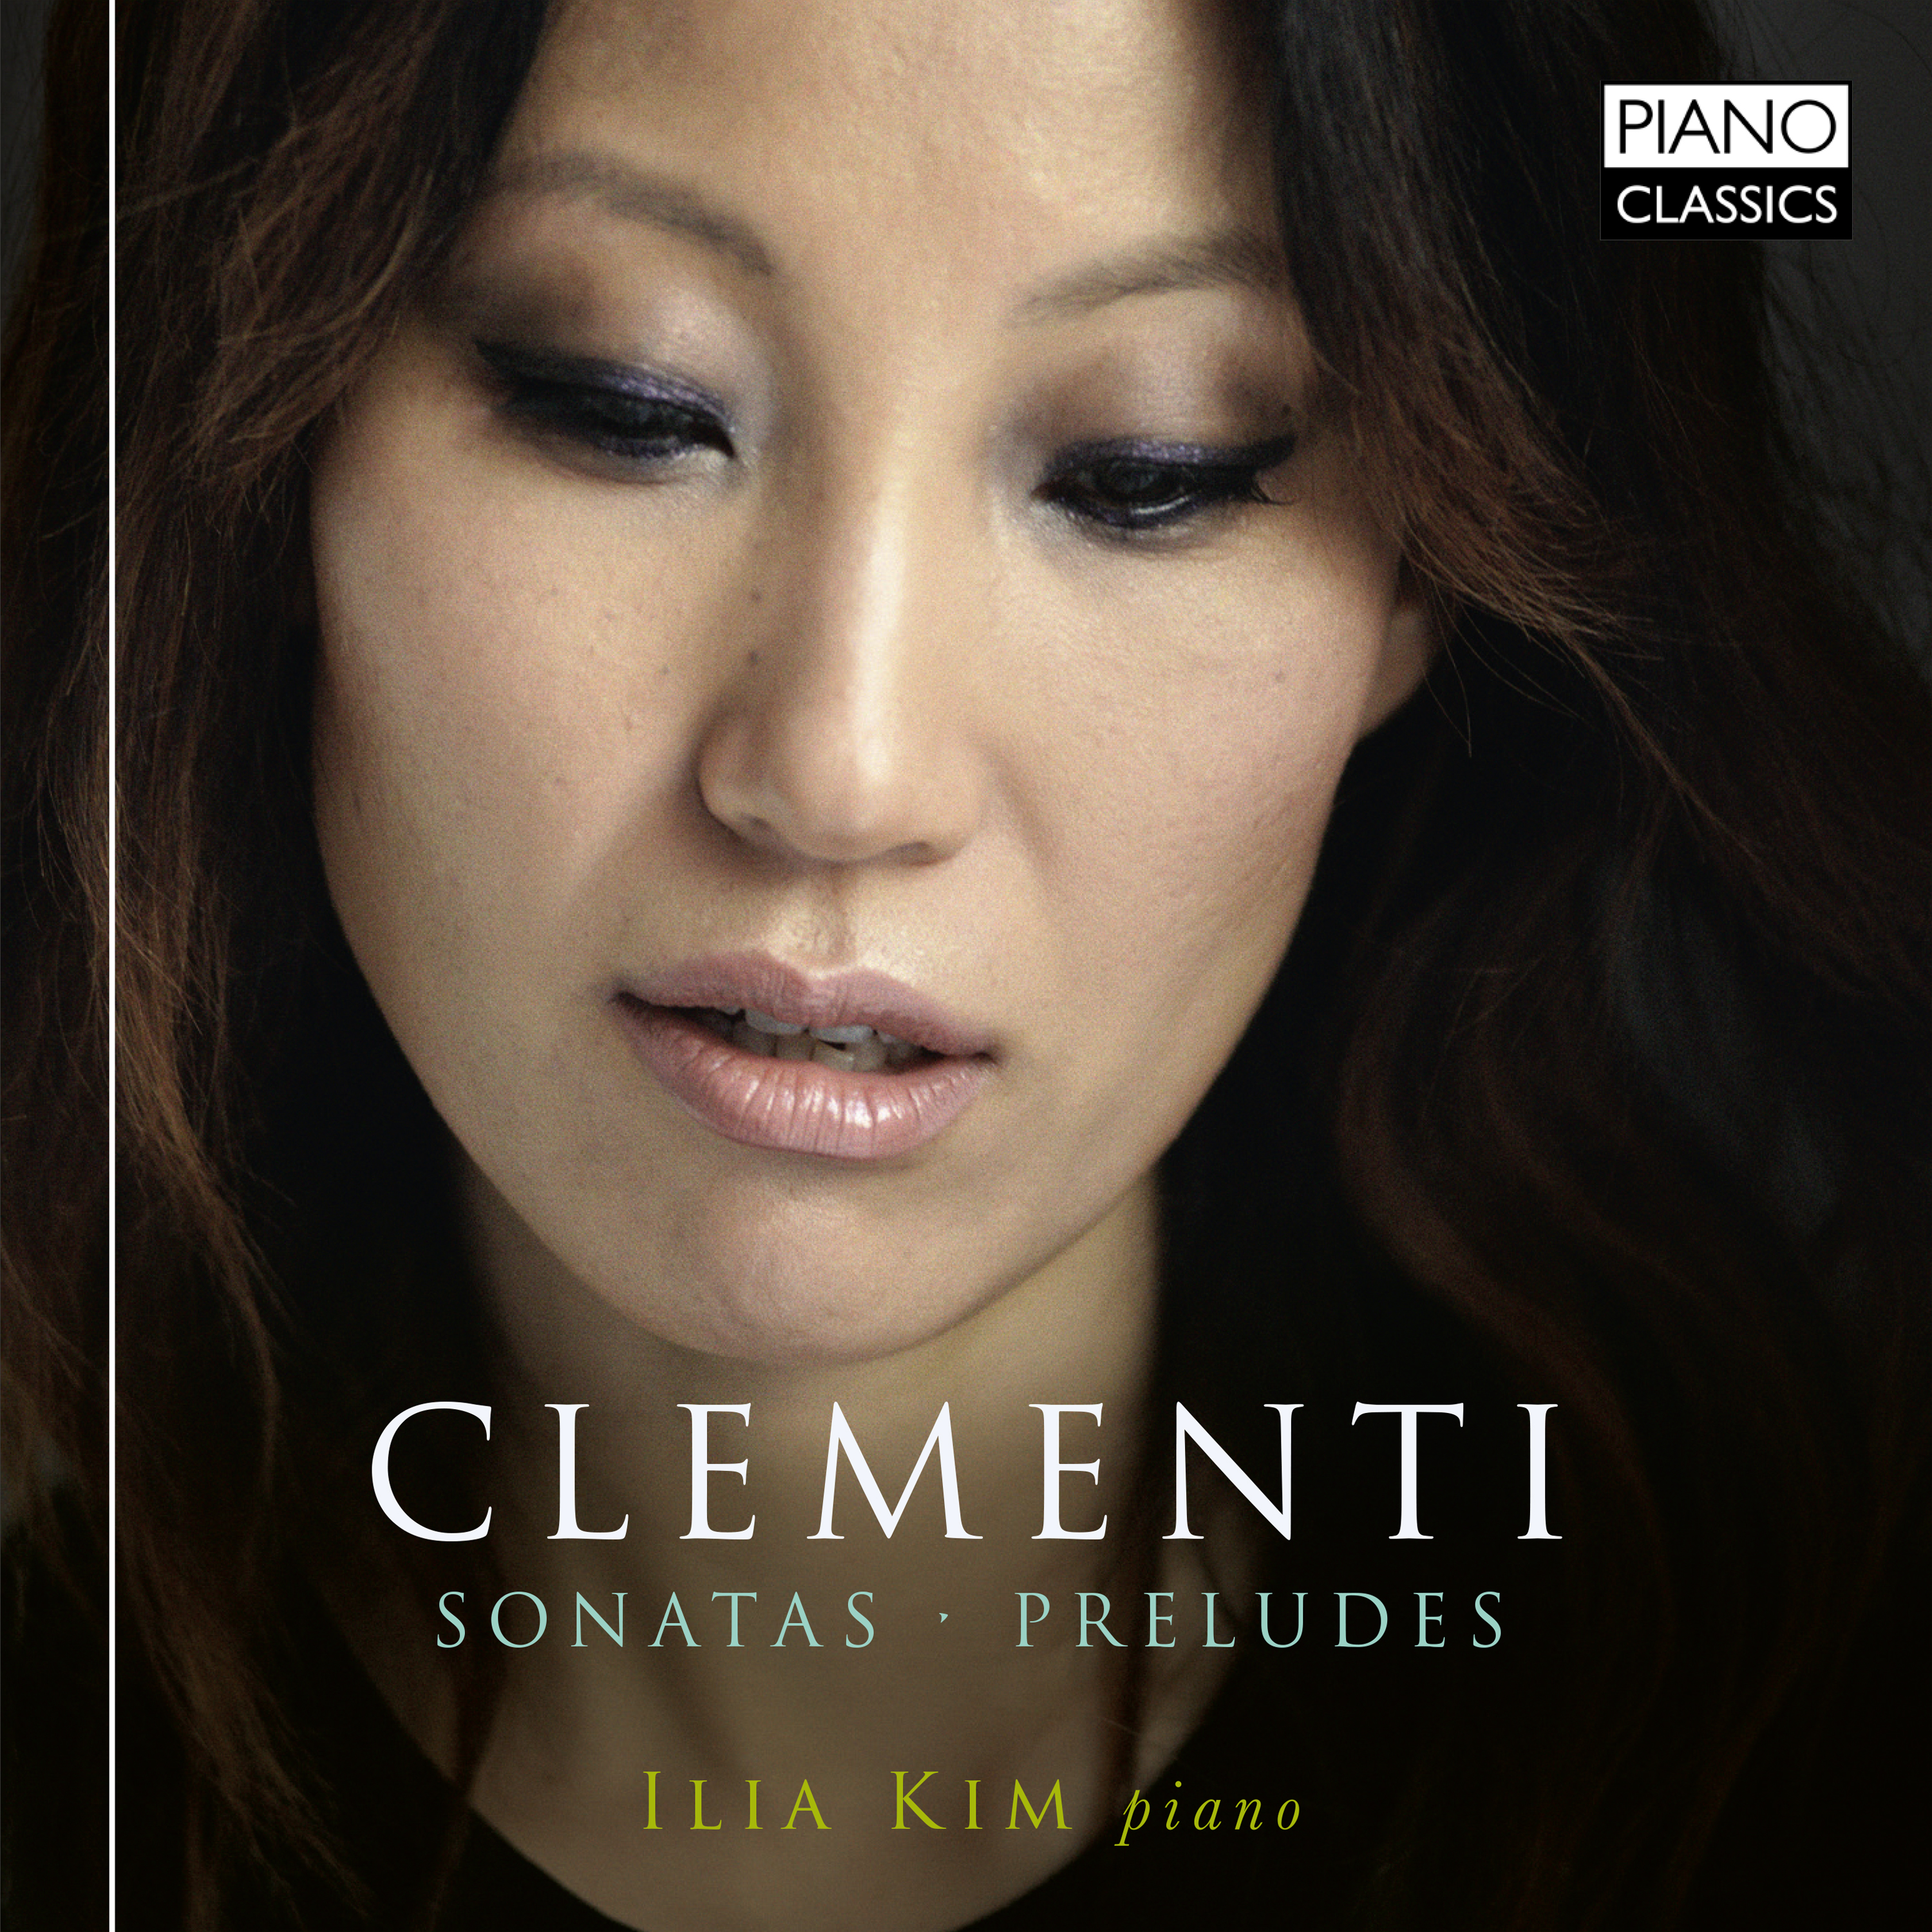 Clementi: Sonatas, Preludes